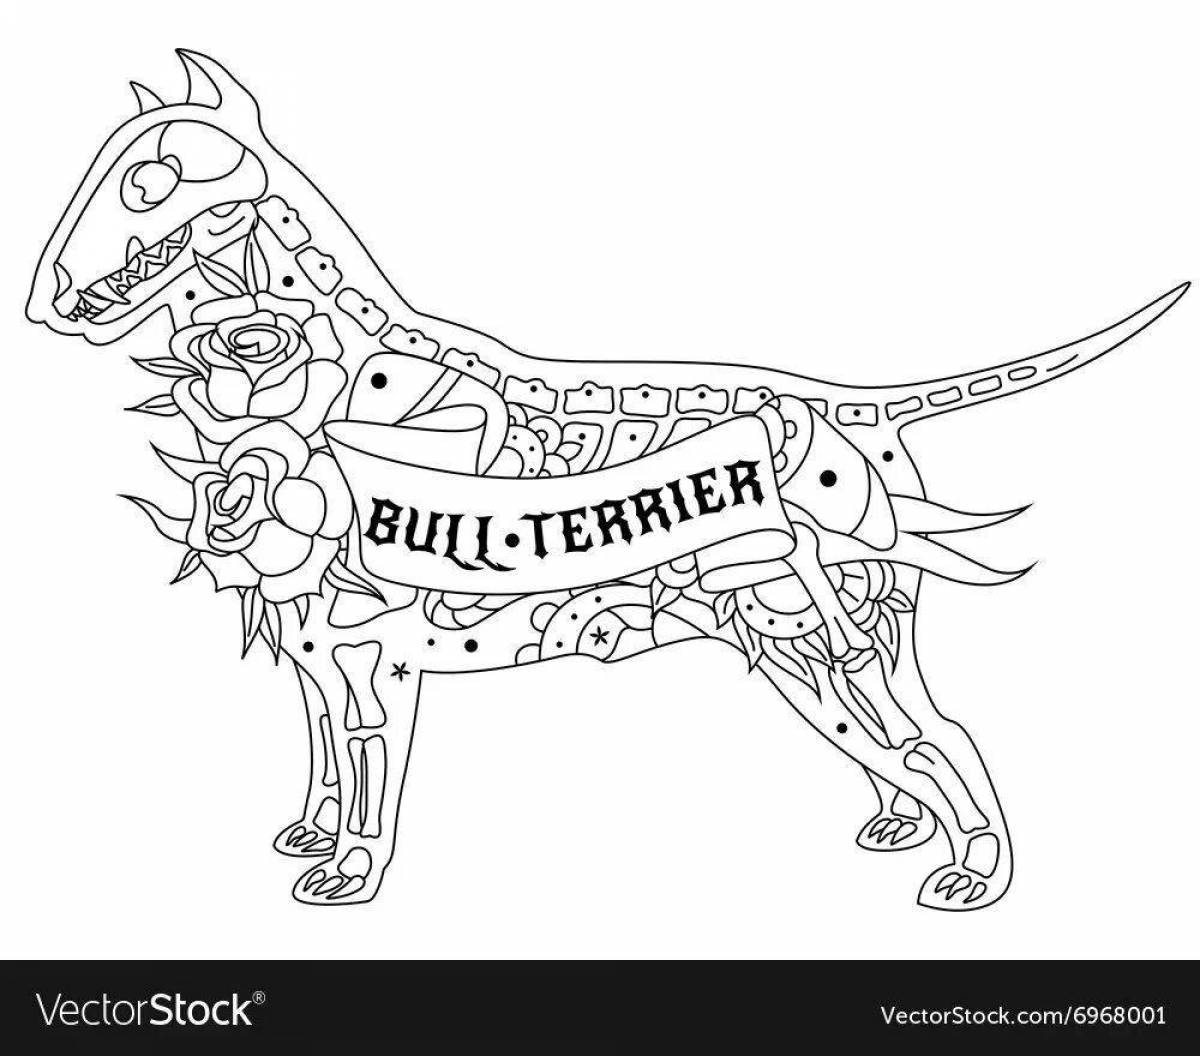 Bull terrier funny coloring book